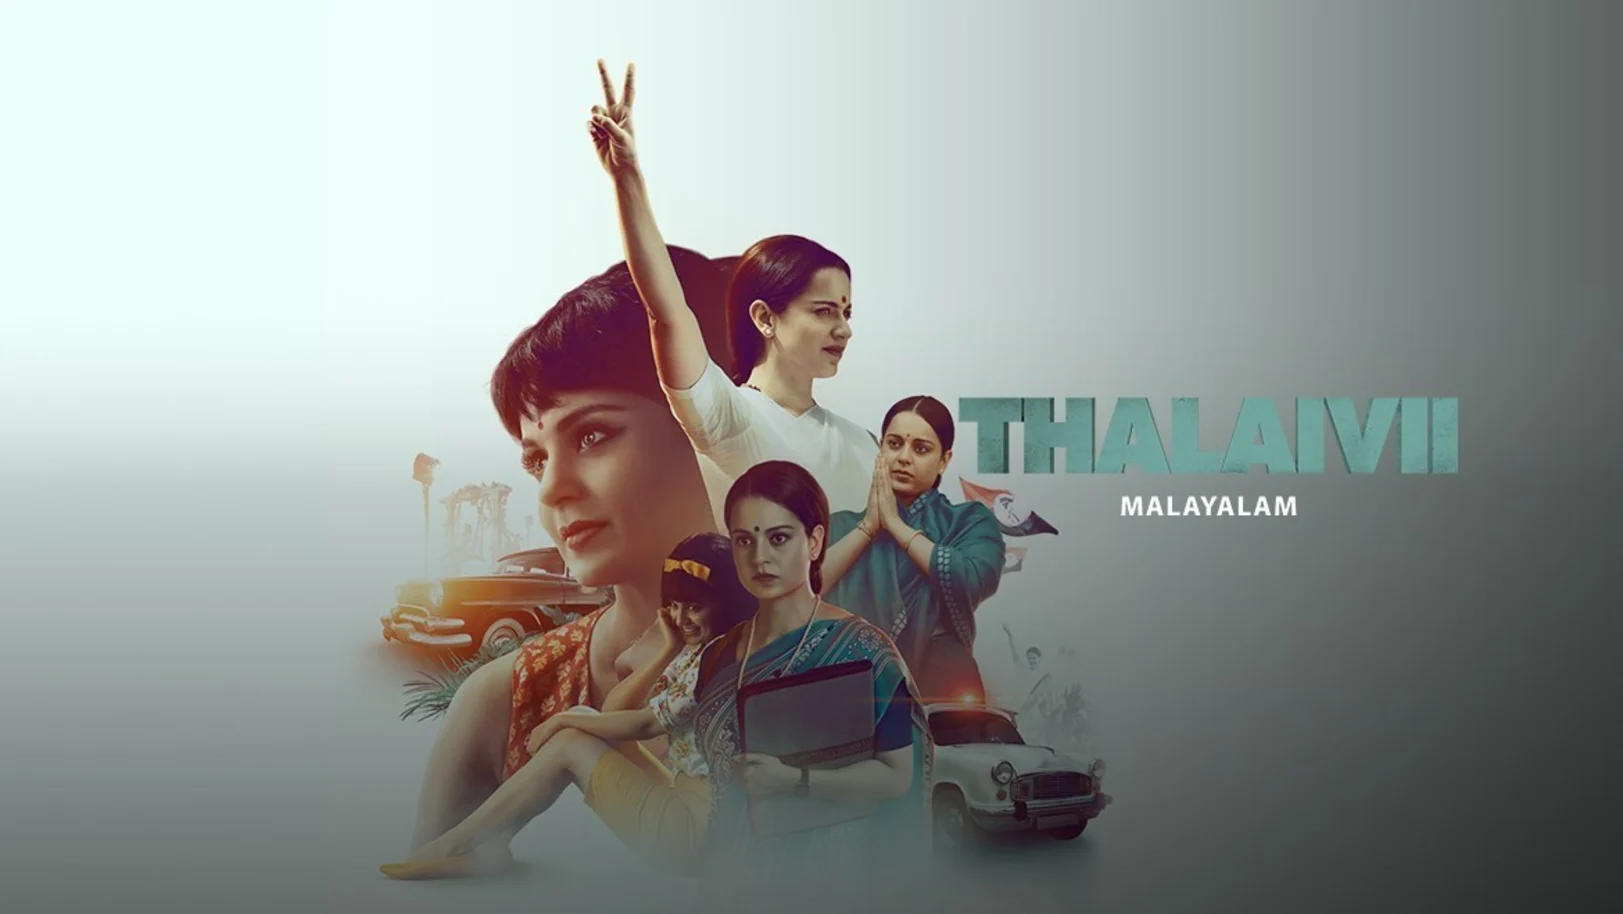 Thalaivii Movie